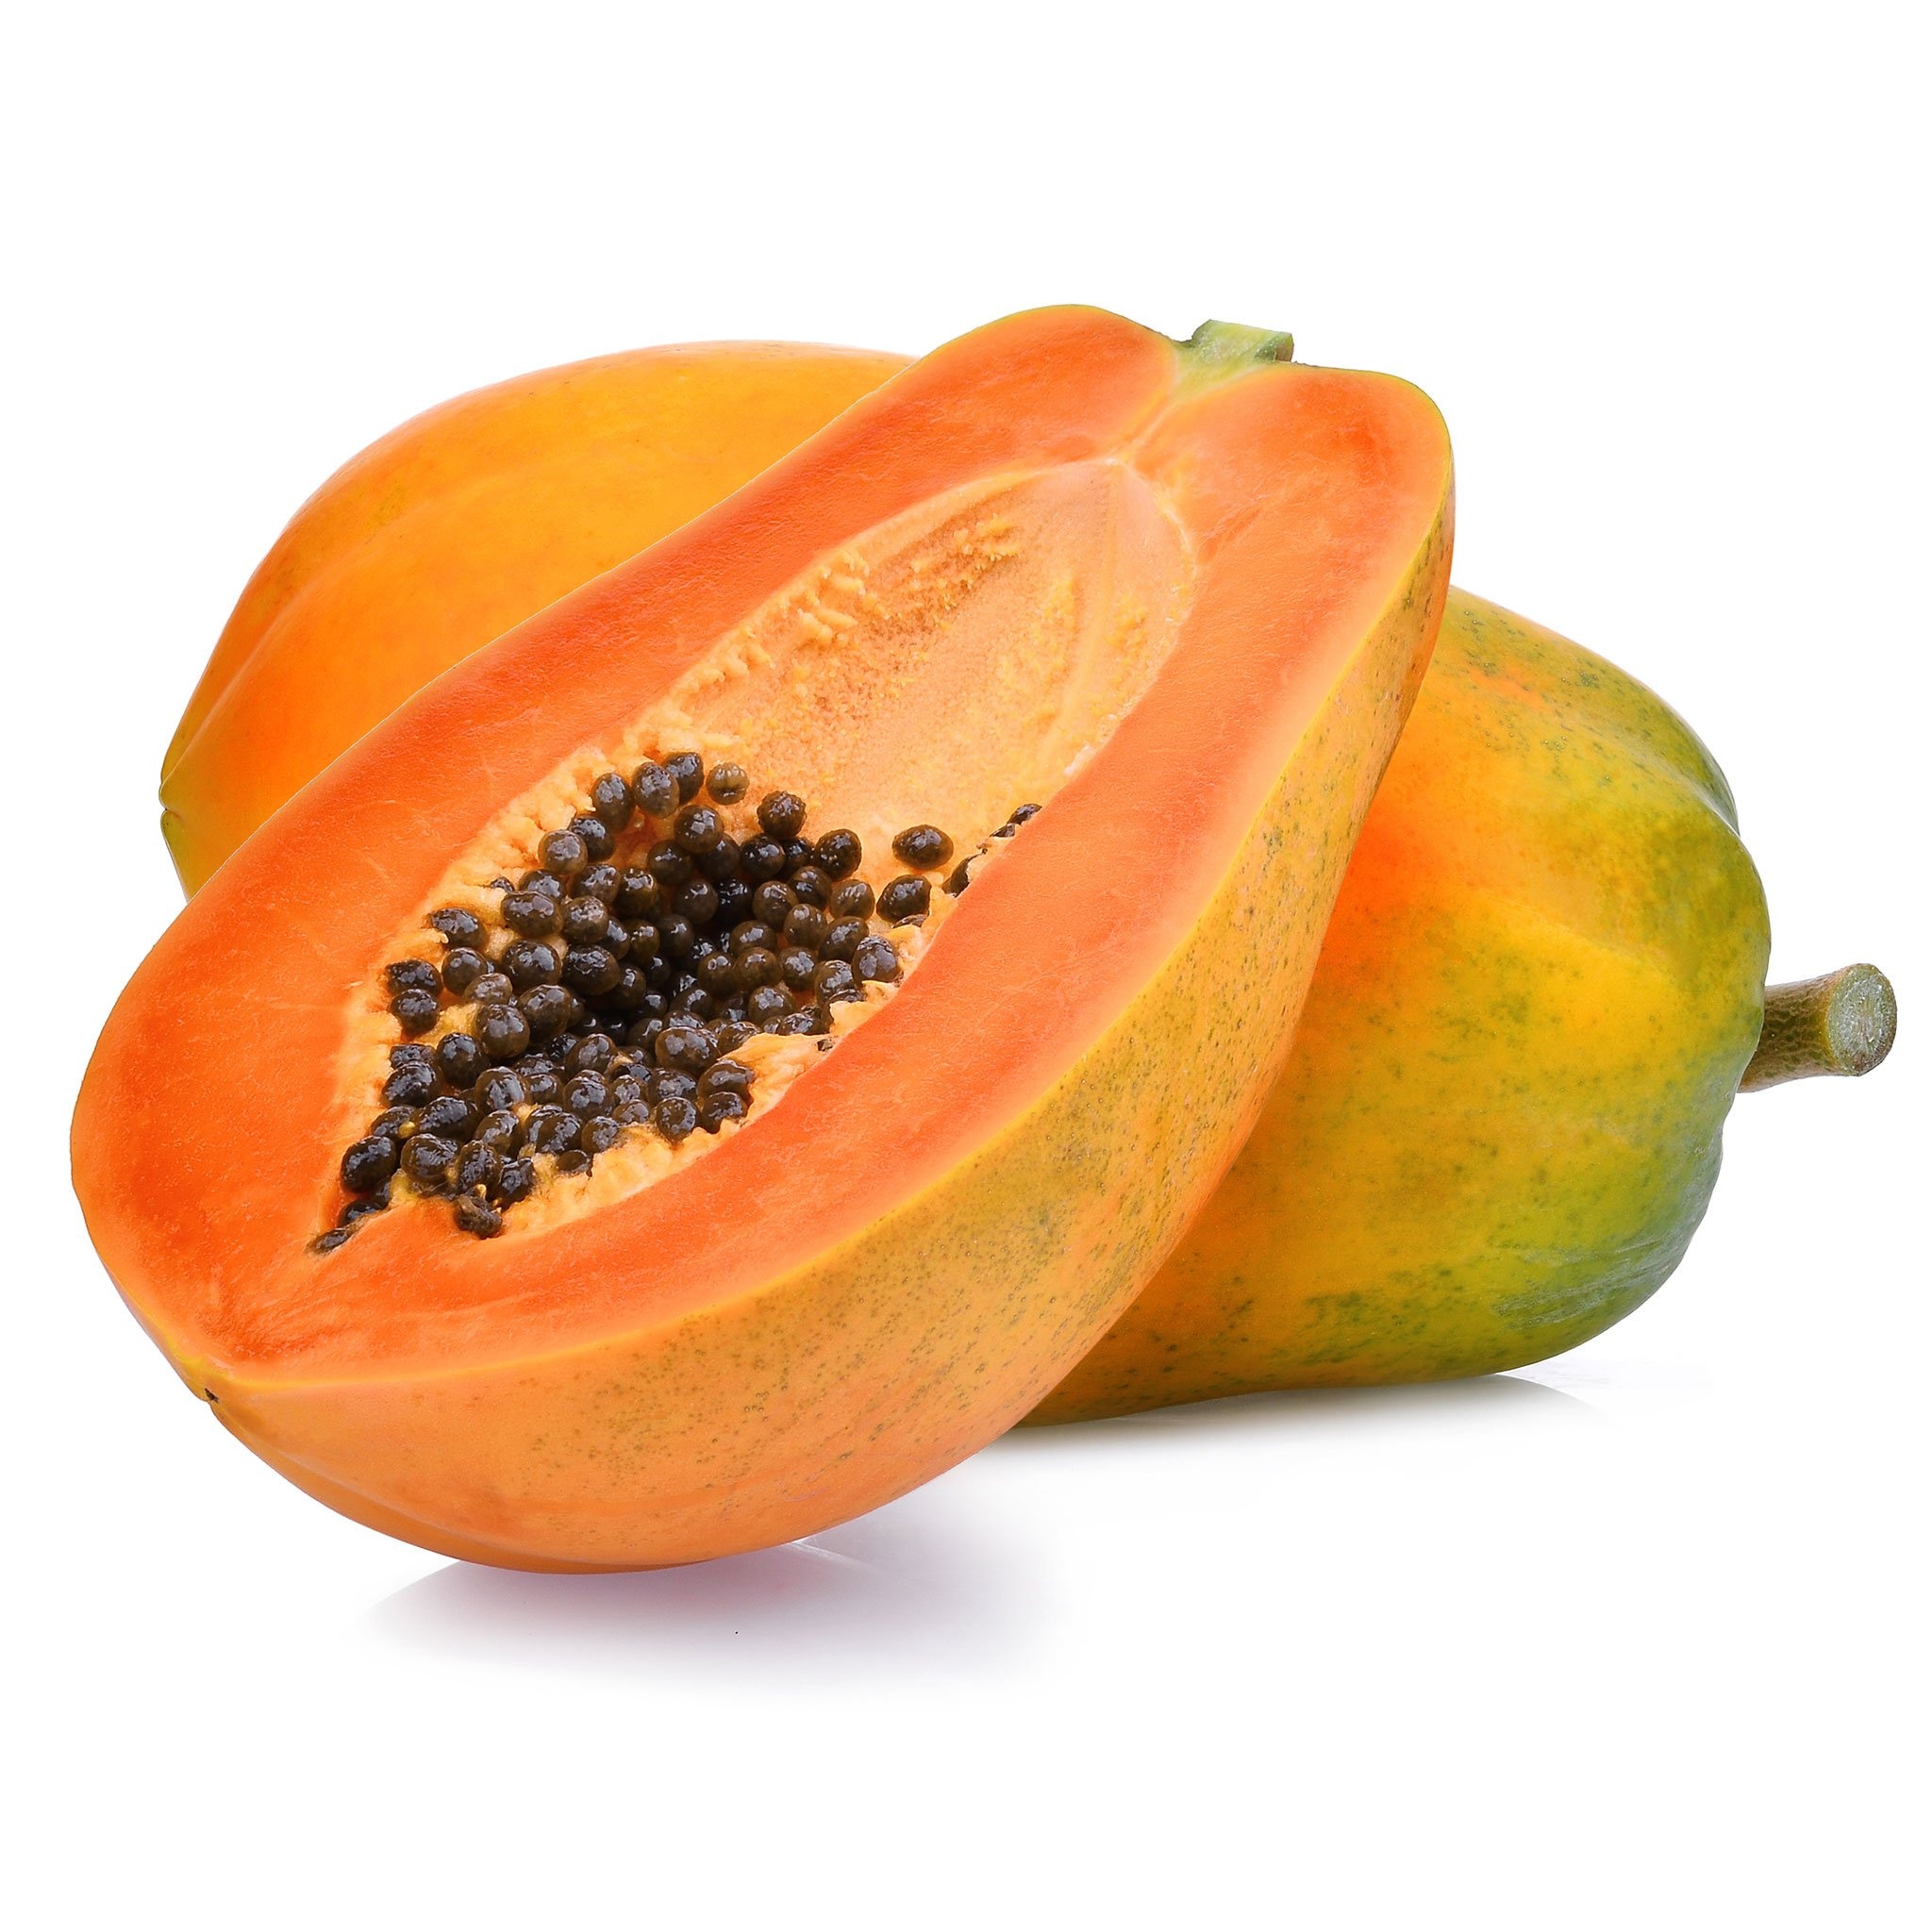 Papaya: A soft, fleshy fruit, Natural foods. 2050x2050 HD Wallpaper.